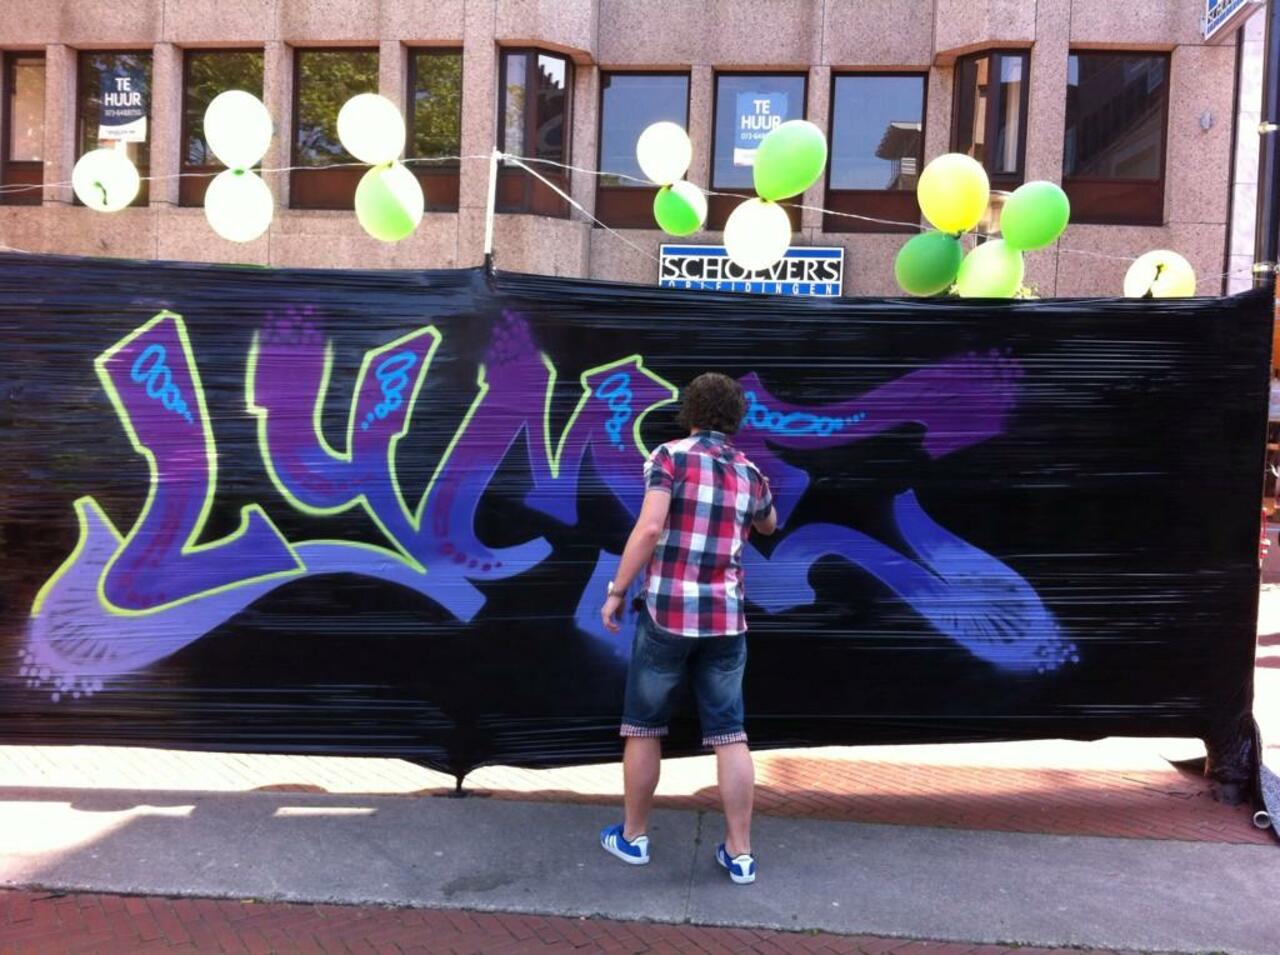 This you must see... #LivePerformance #graffiti #art by #ScanOne http://youtu.be/Joq3enU3JMw RT @goodfellasmag http://t.co/KPT1PFIaC3